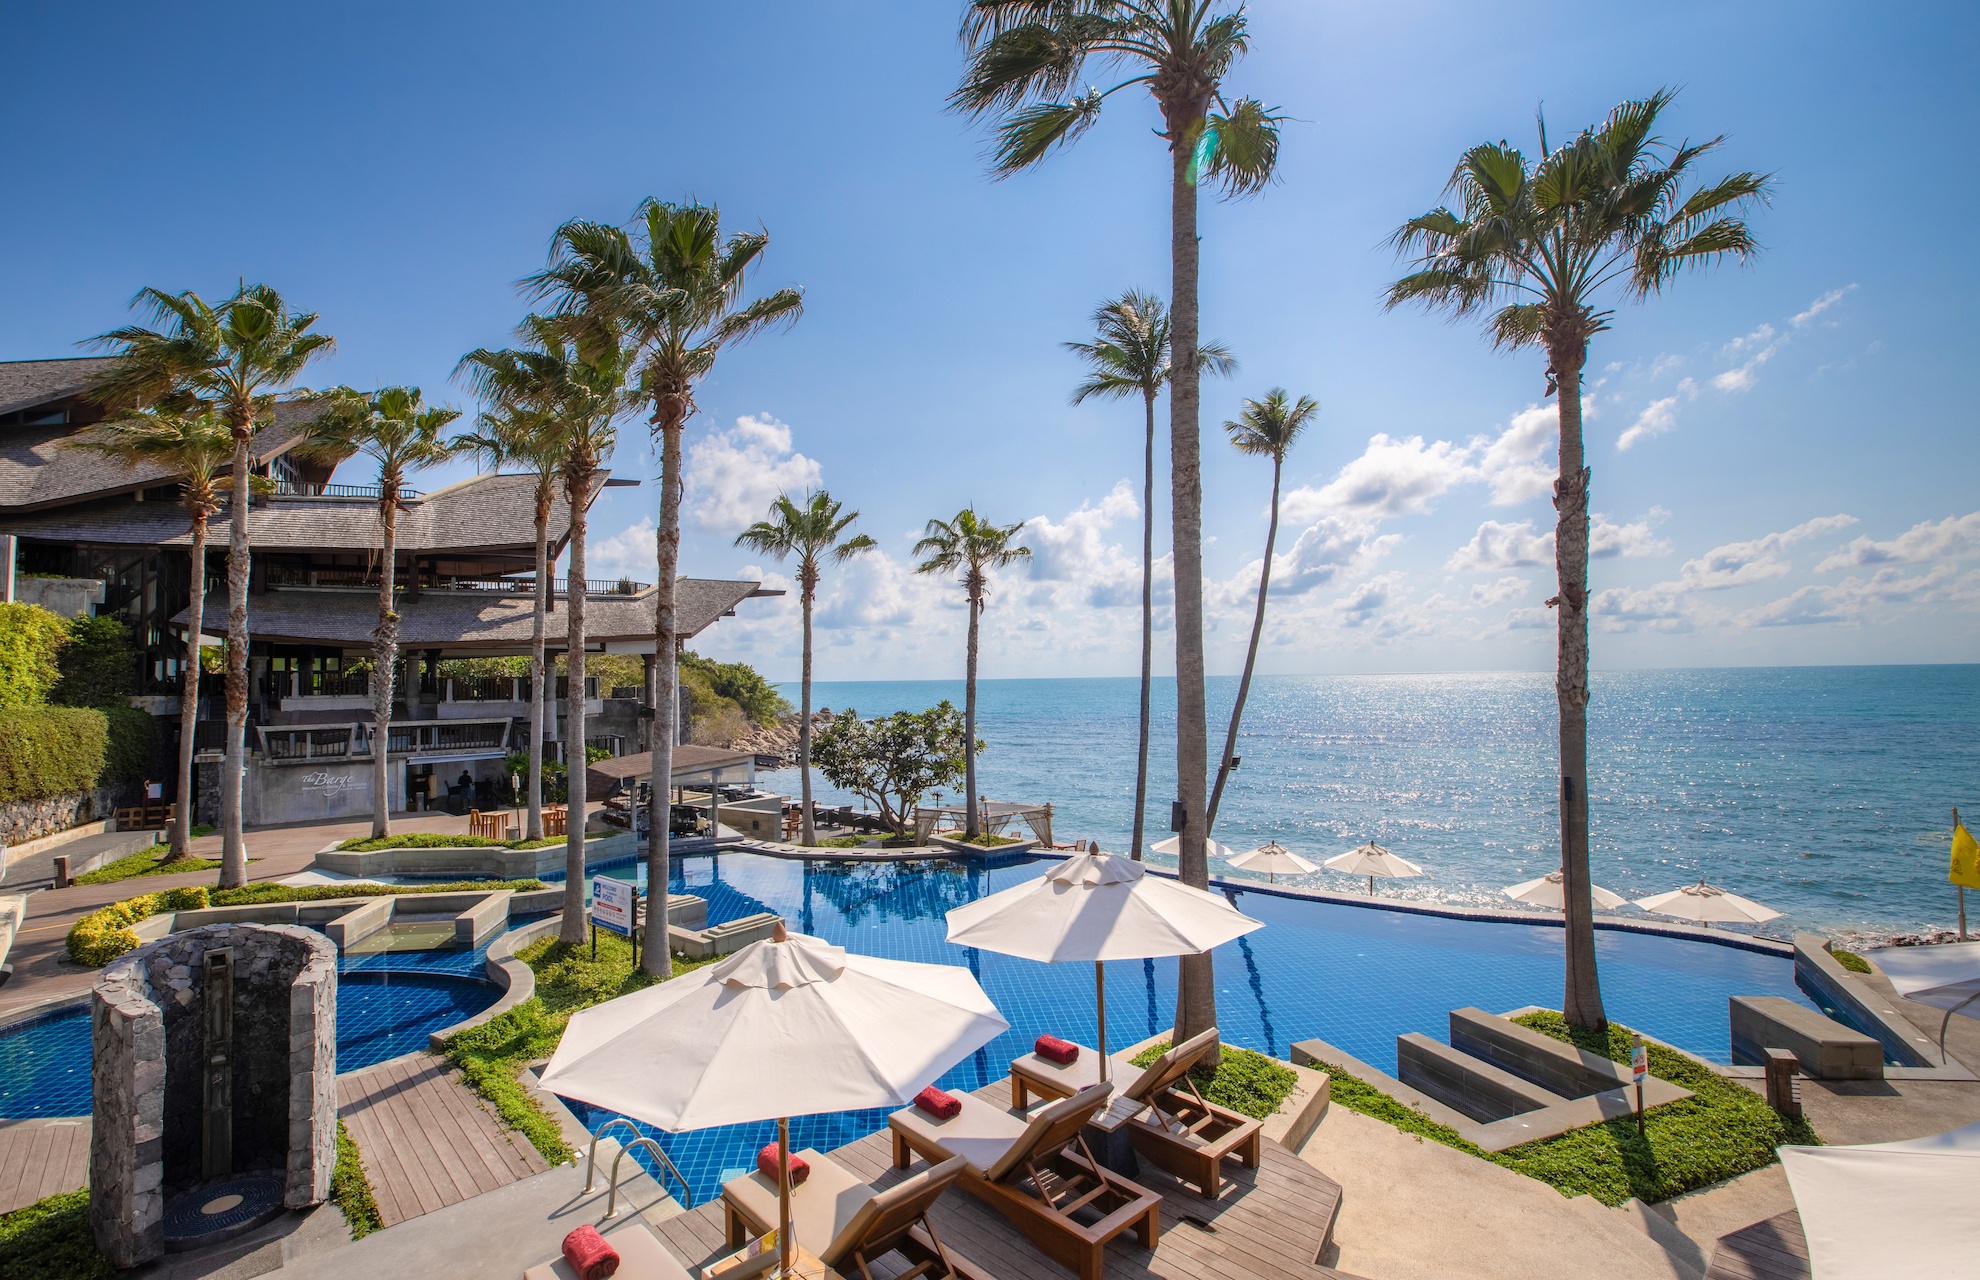 Buri. East Beach Санта Барбара. Mazatlan Mexico. Next Resort and Residences. Hilton.